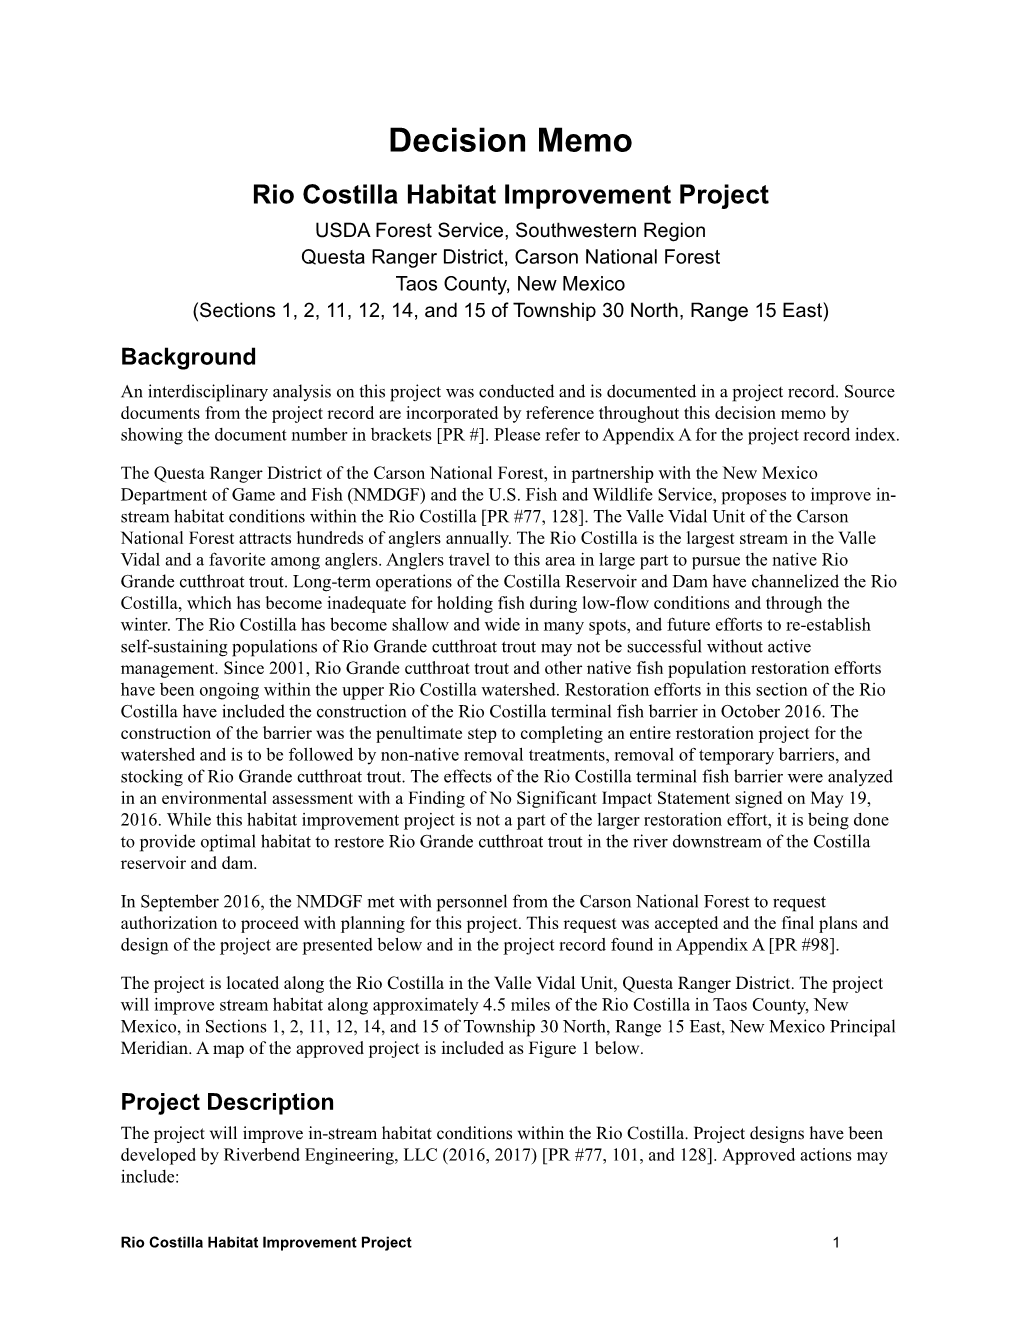 Rio Costilla Habitat Improvement Project